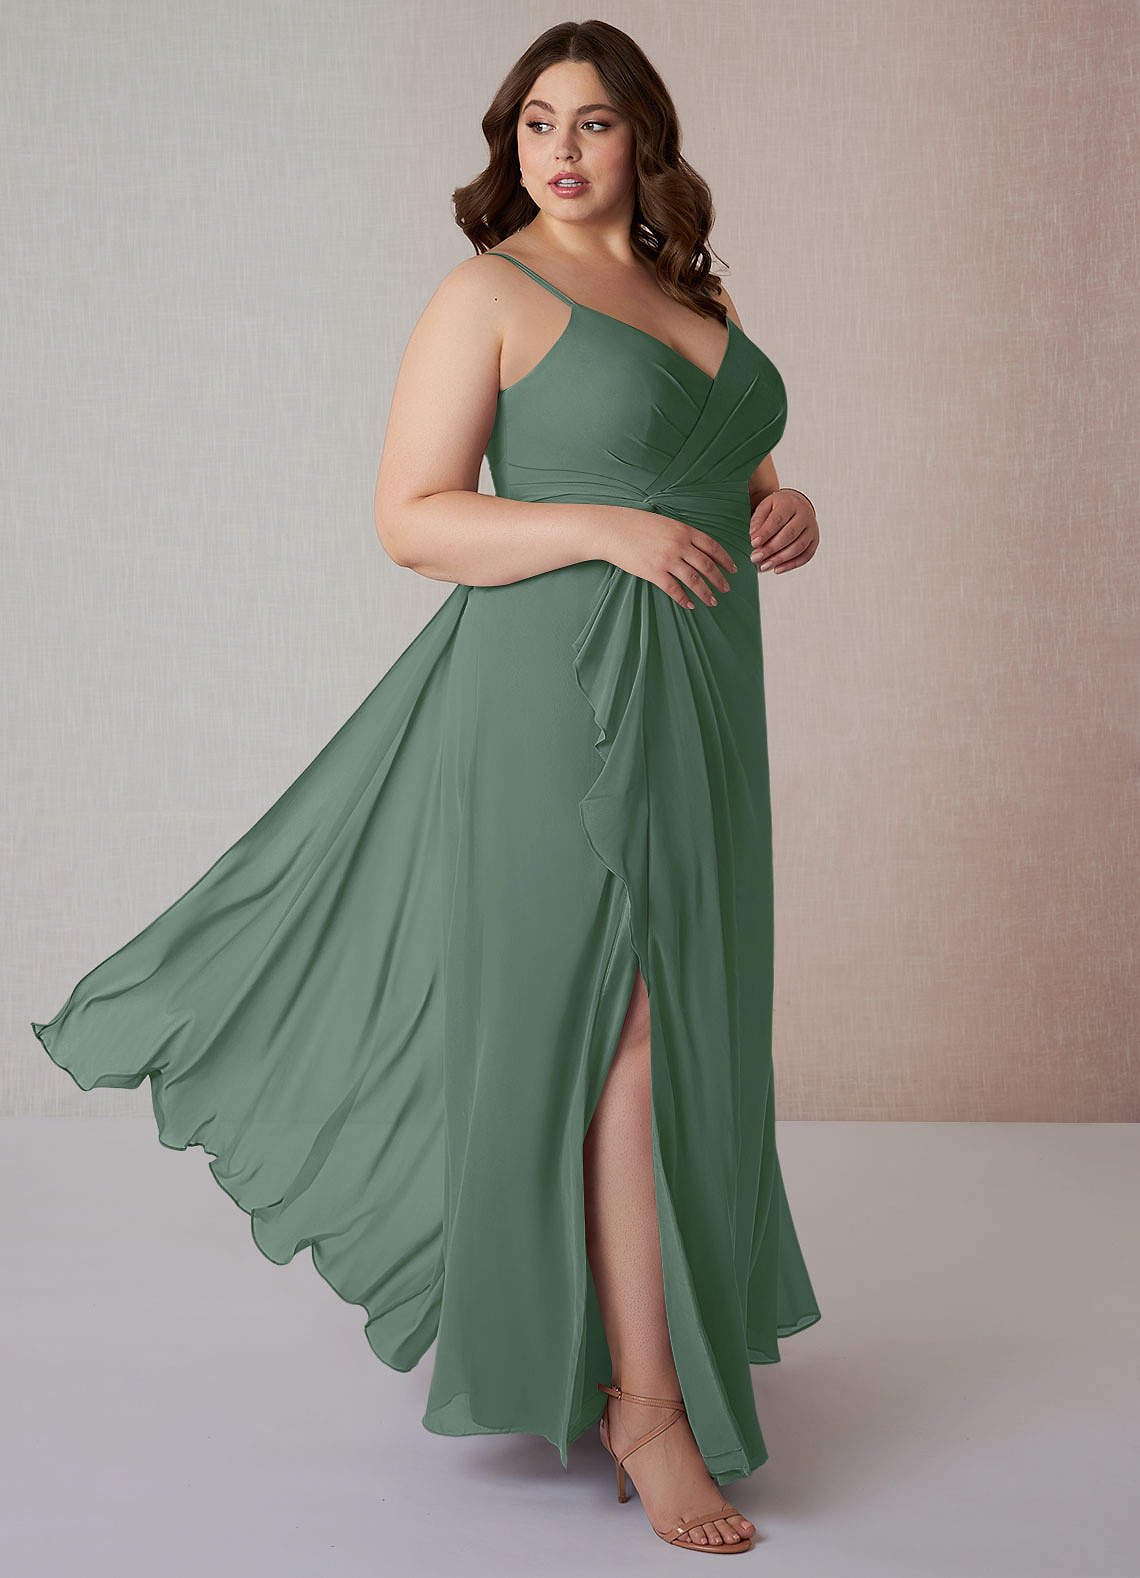 Azazie Emerald Bridesmaid Dresses A-Line Ruffled Chiffon Floor-Length Dress image1